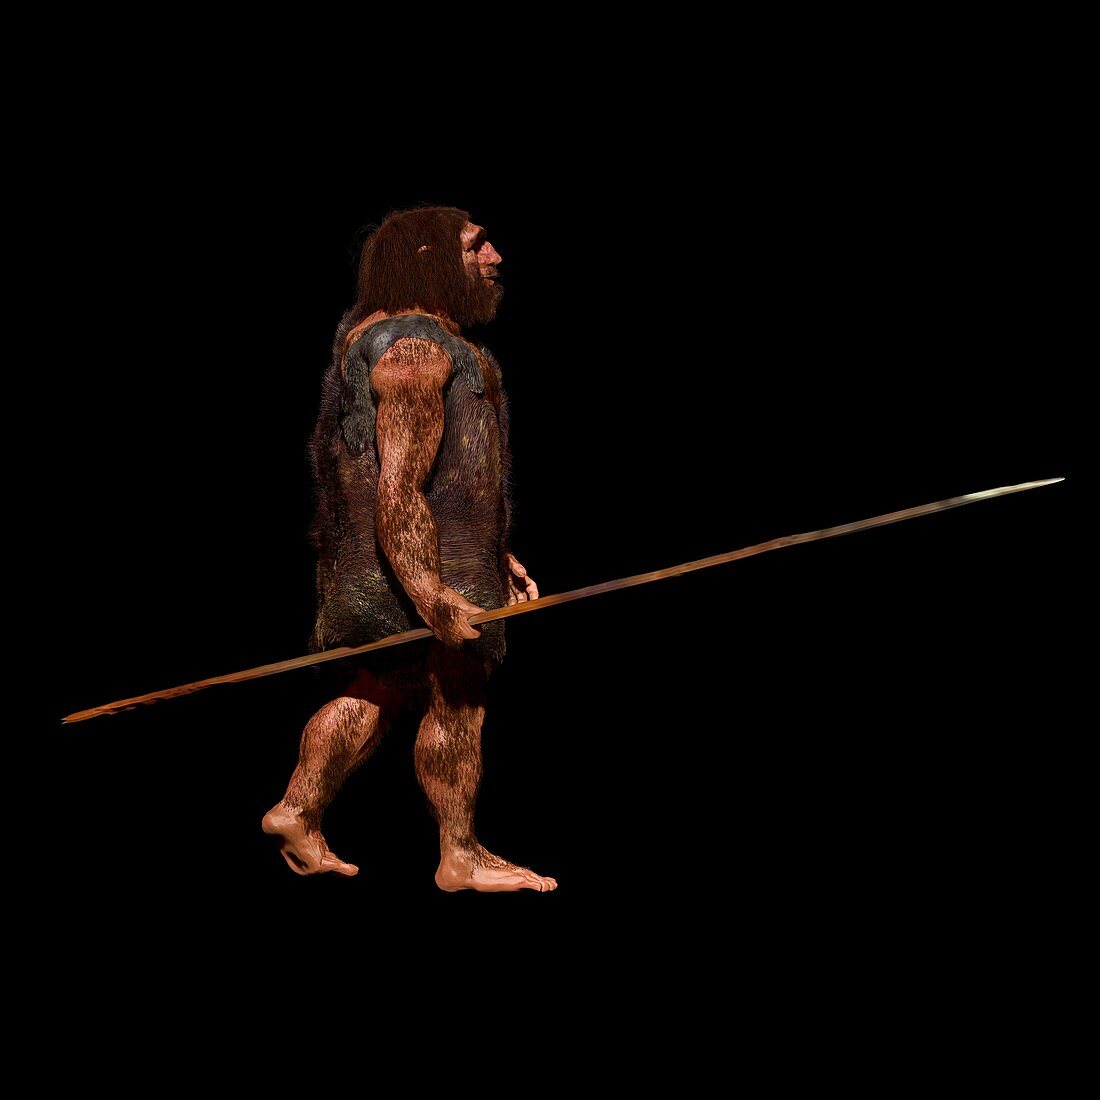 Neanderthal hunter, illustration